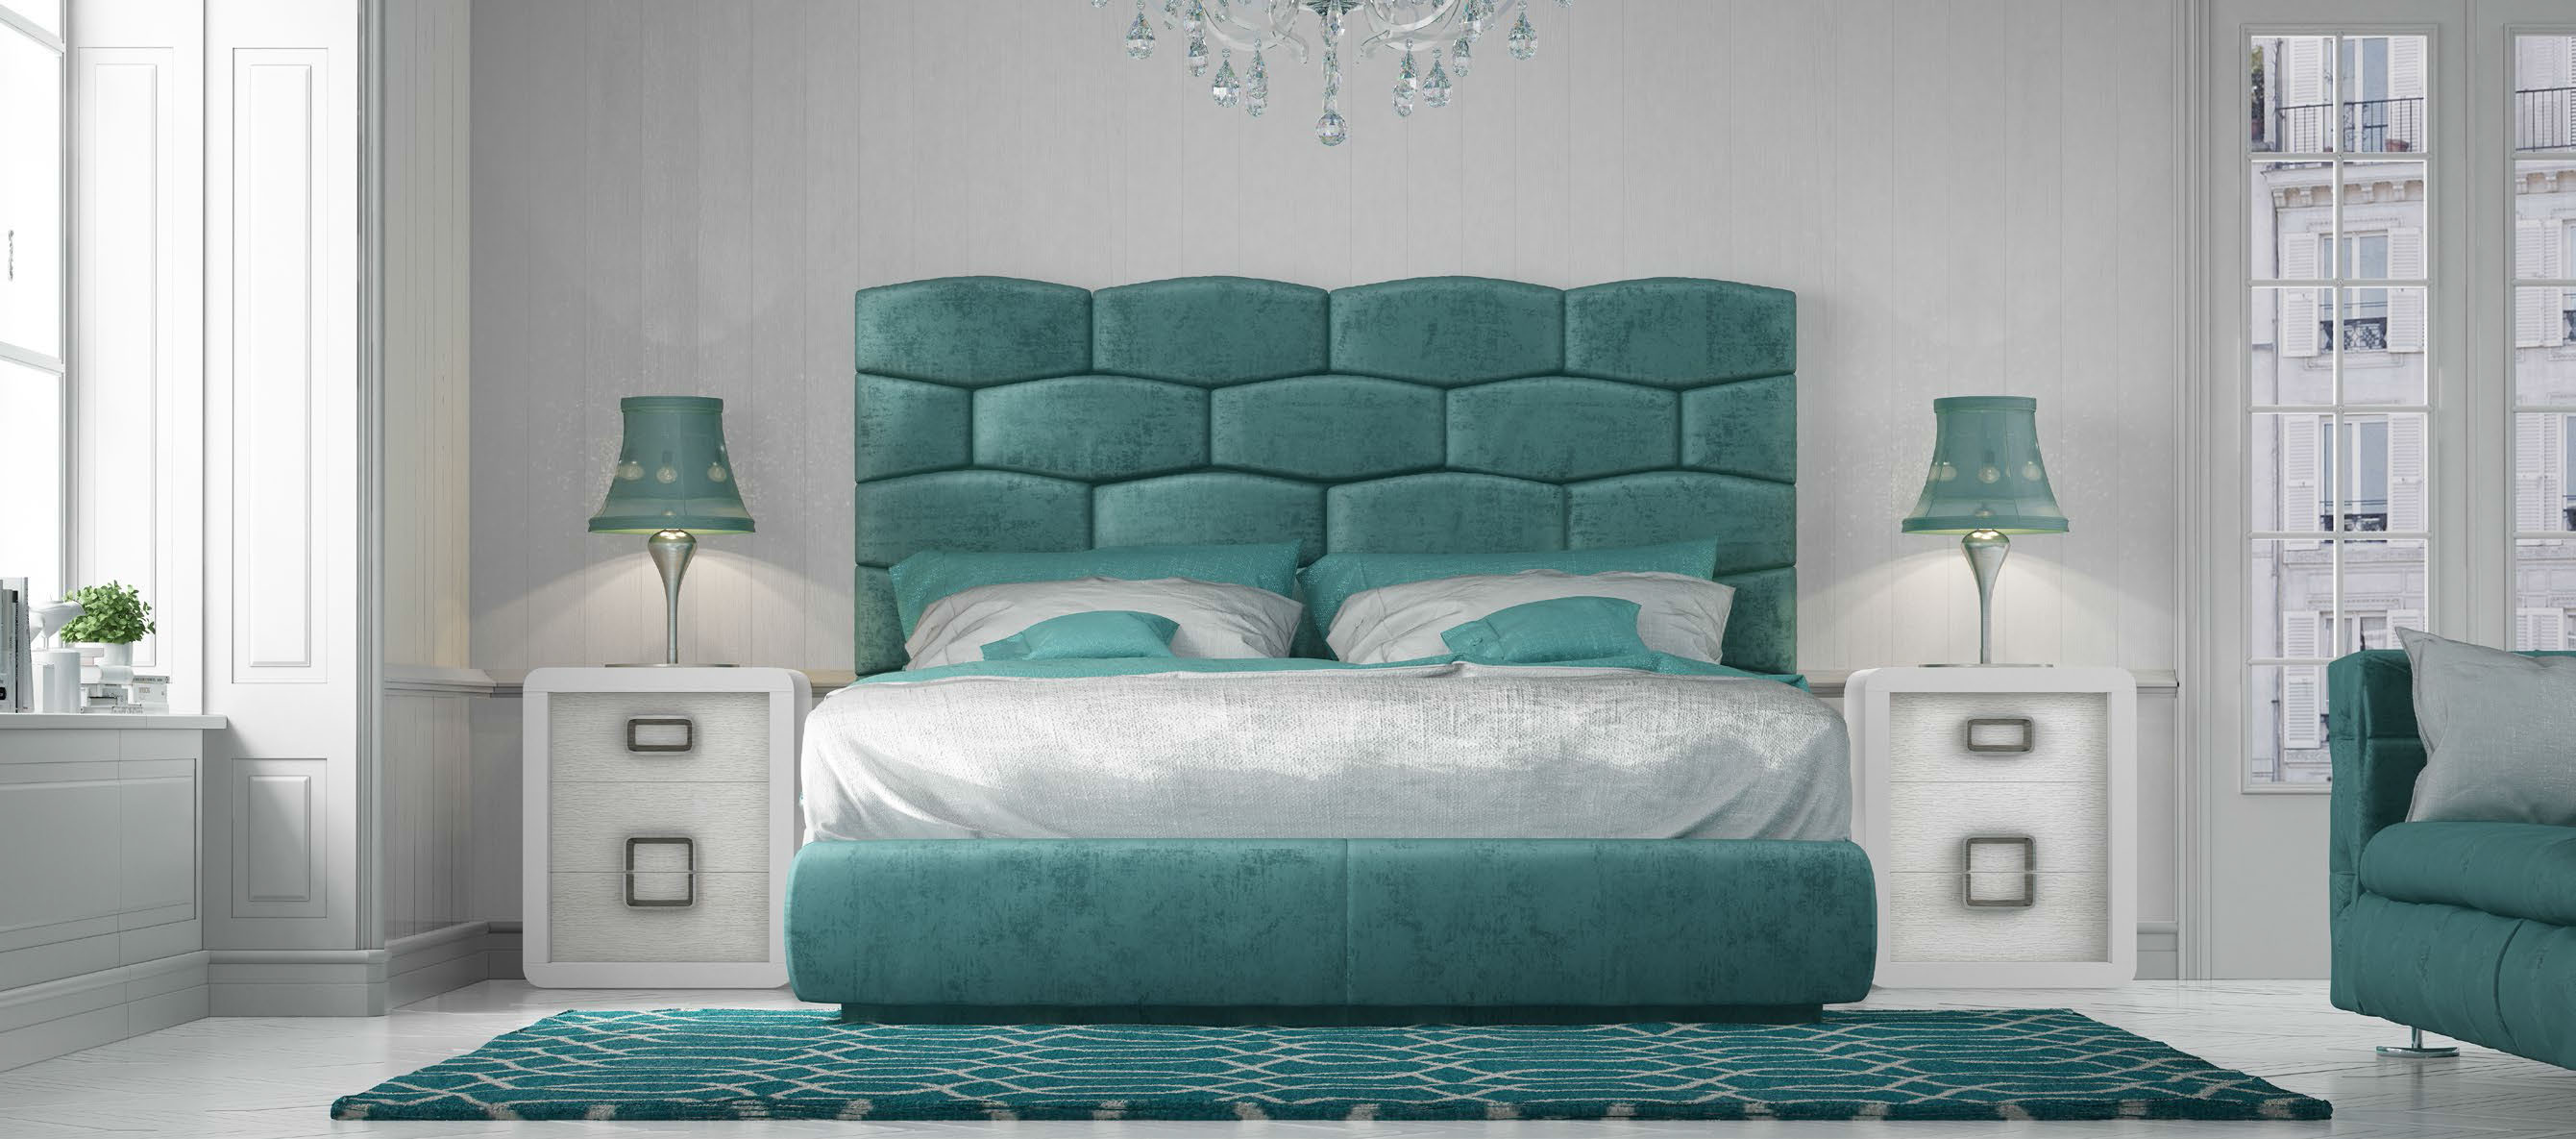 Brands Franco Furniture Bedrooms vol2, Spain DOR 178